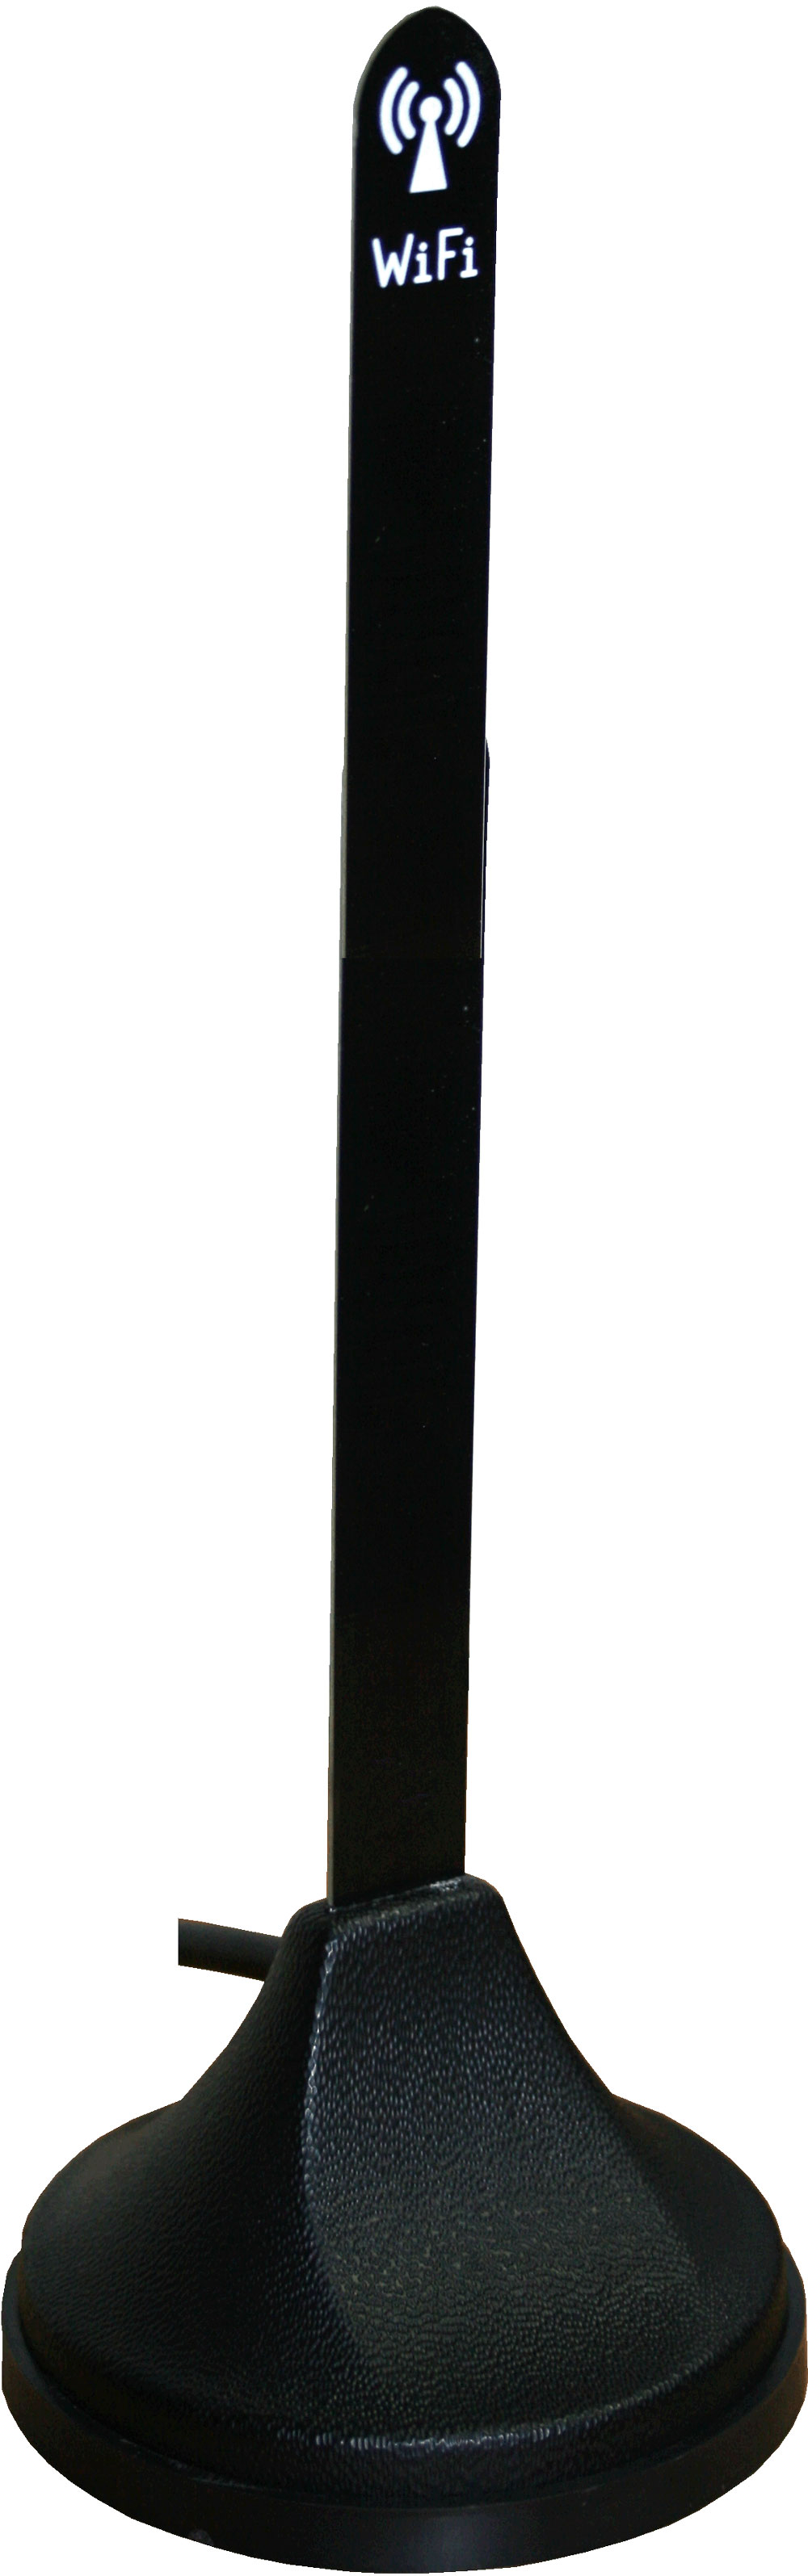 Триада-МА 2440 Sota, Black антенна WiFi на магнитном основании